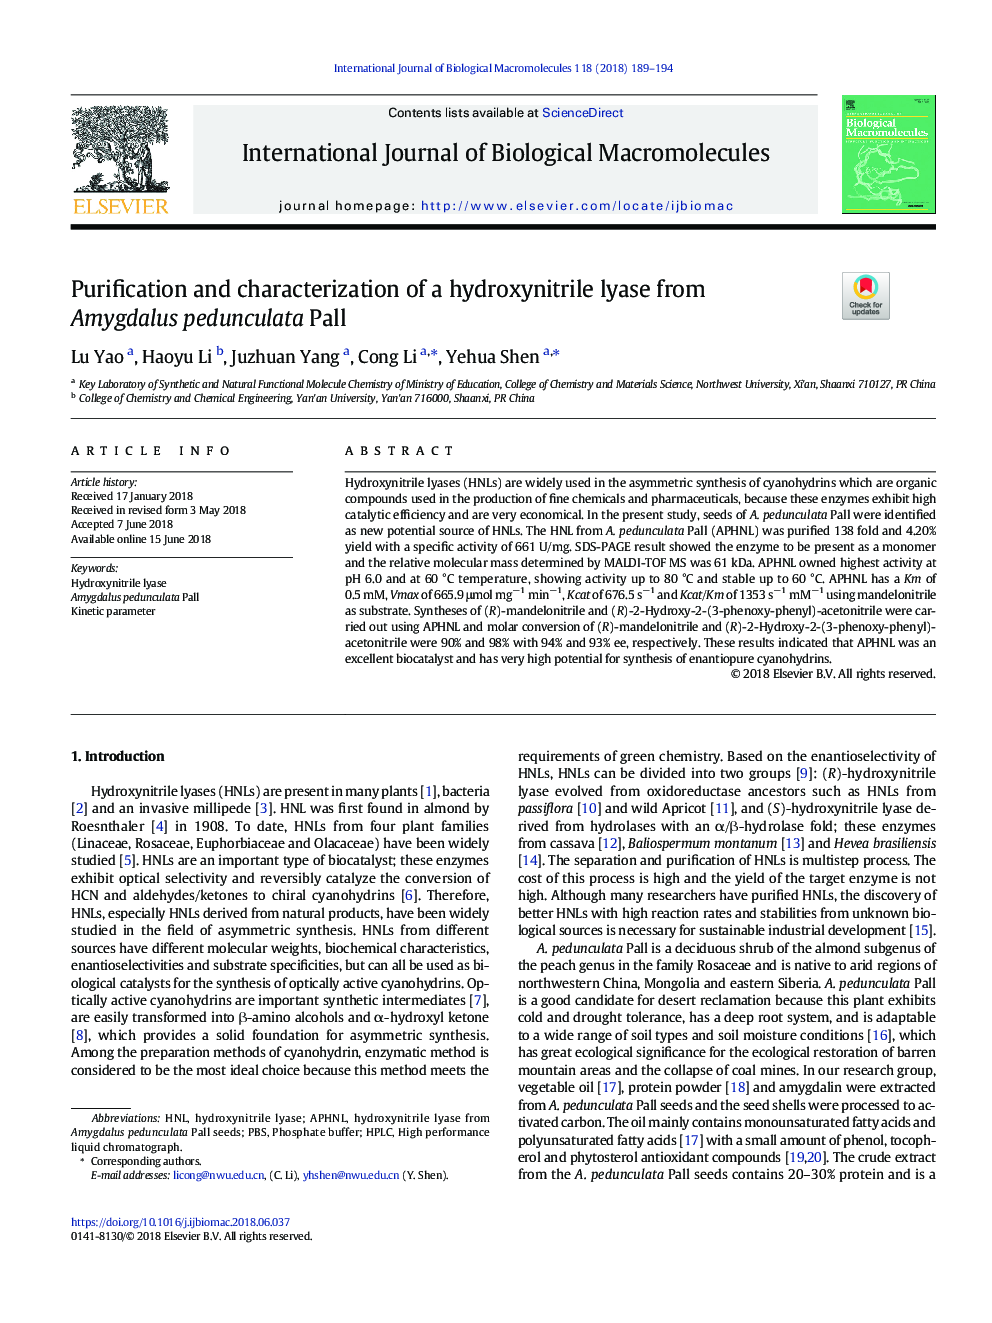 Purification and characterization of a hydroxynitrile lyase from Amygdalus pedunculata Pall